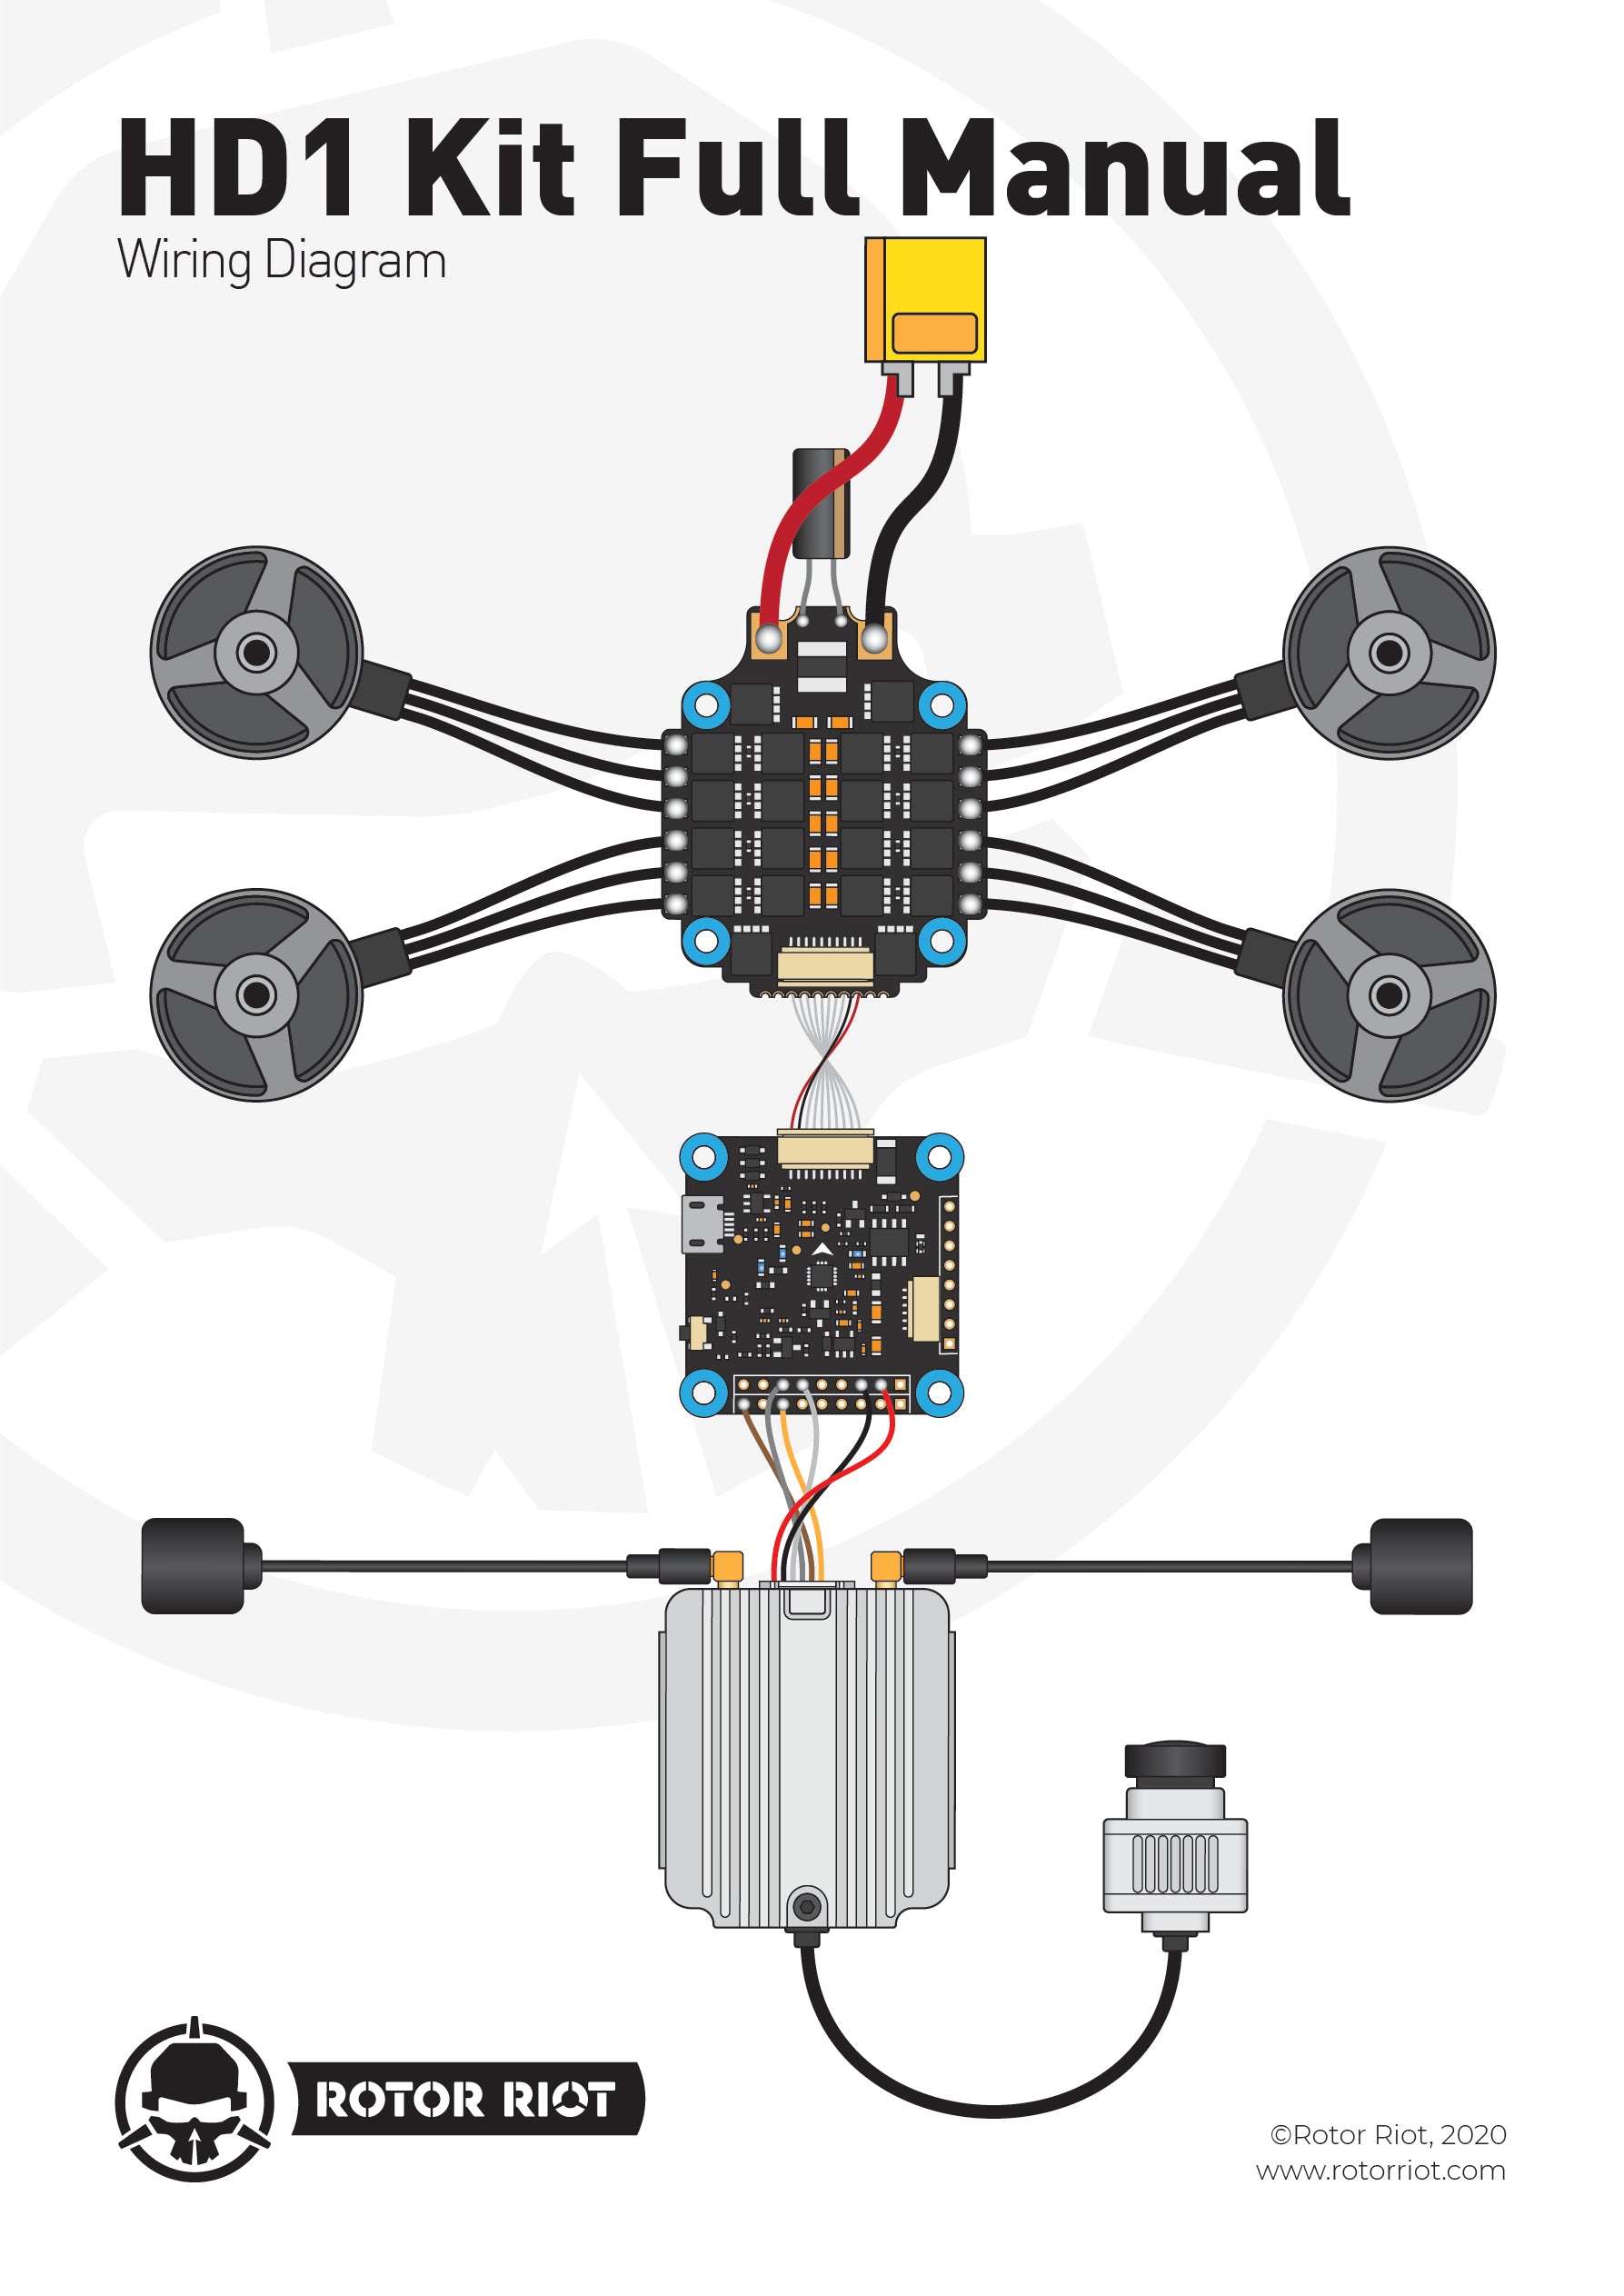 Rotor Riot HD1 Kit Full Manual Wiring Diagram with DJI Air Unit